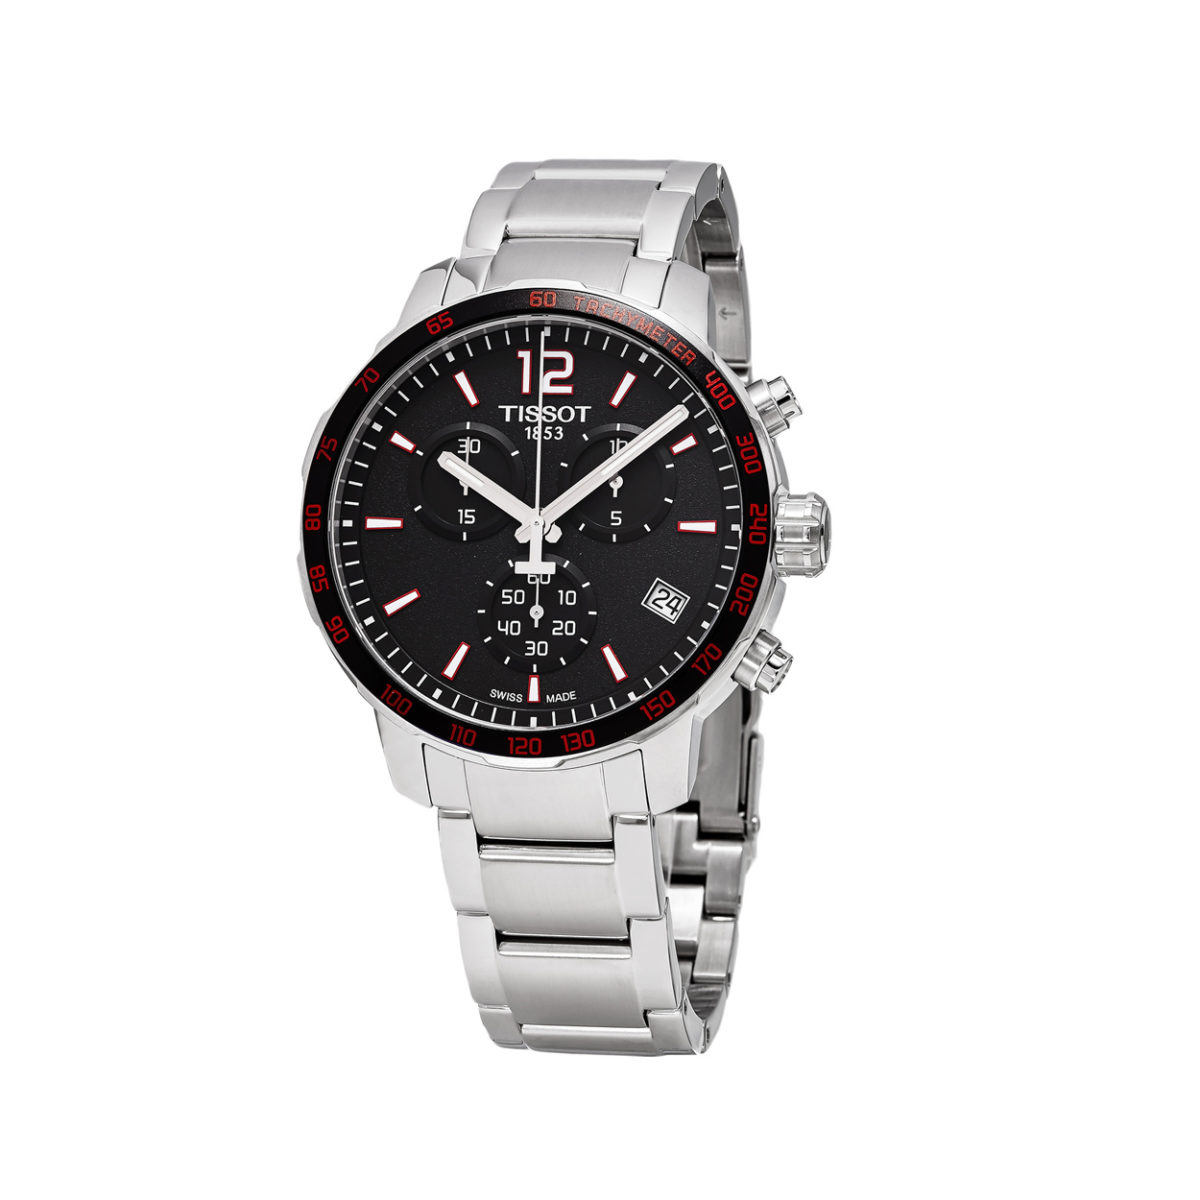 Tissot T-Sport Quickster Silver-Black-Red Chronograph Men's Watch - T095.417.11.057.00